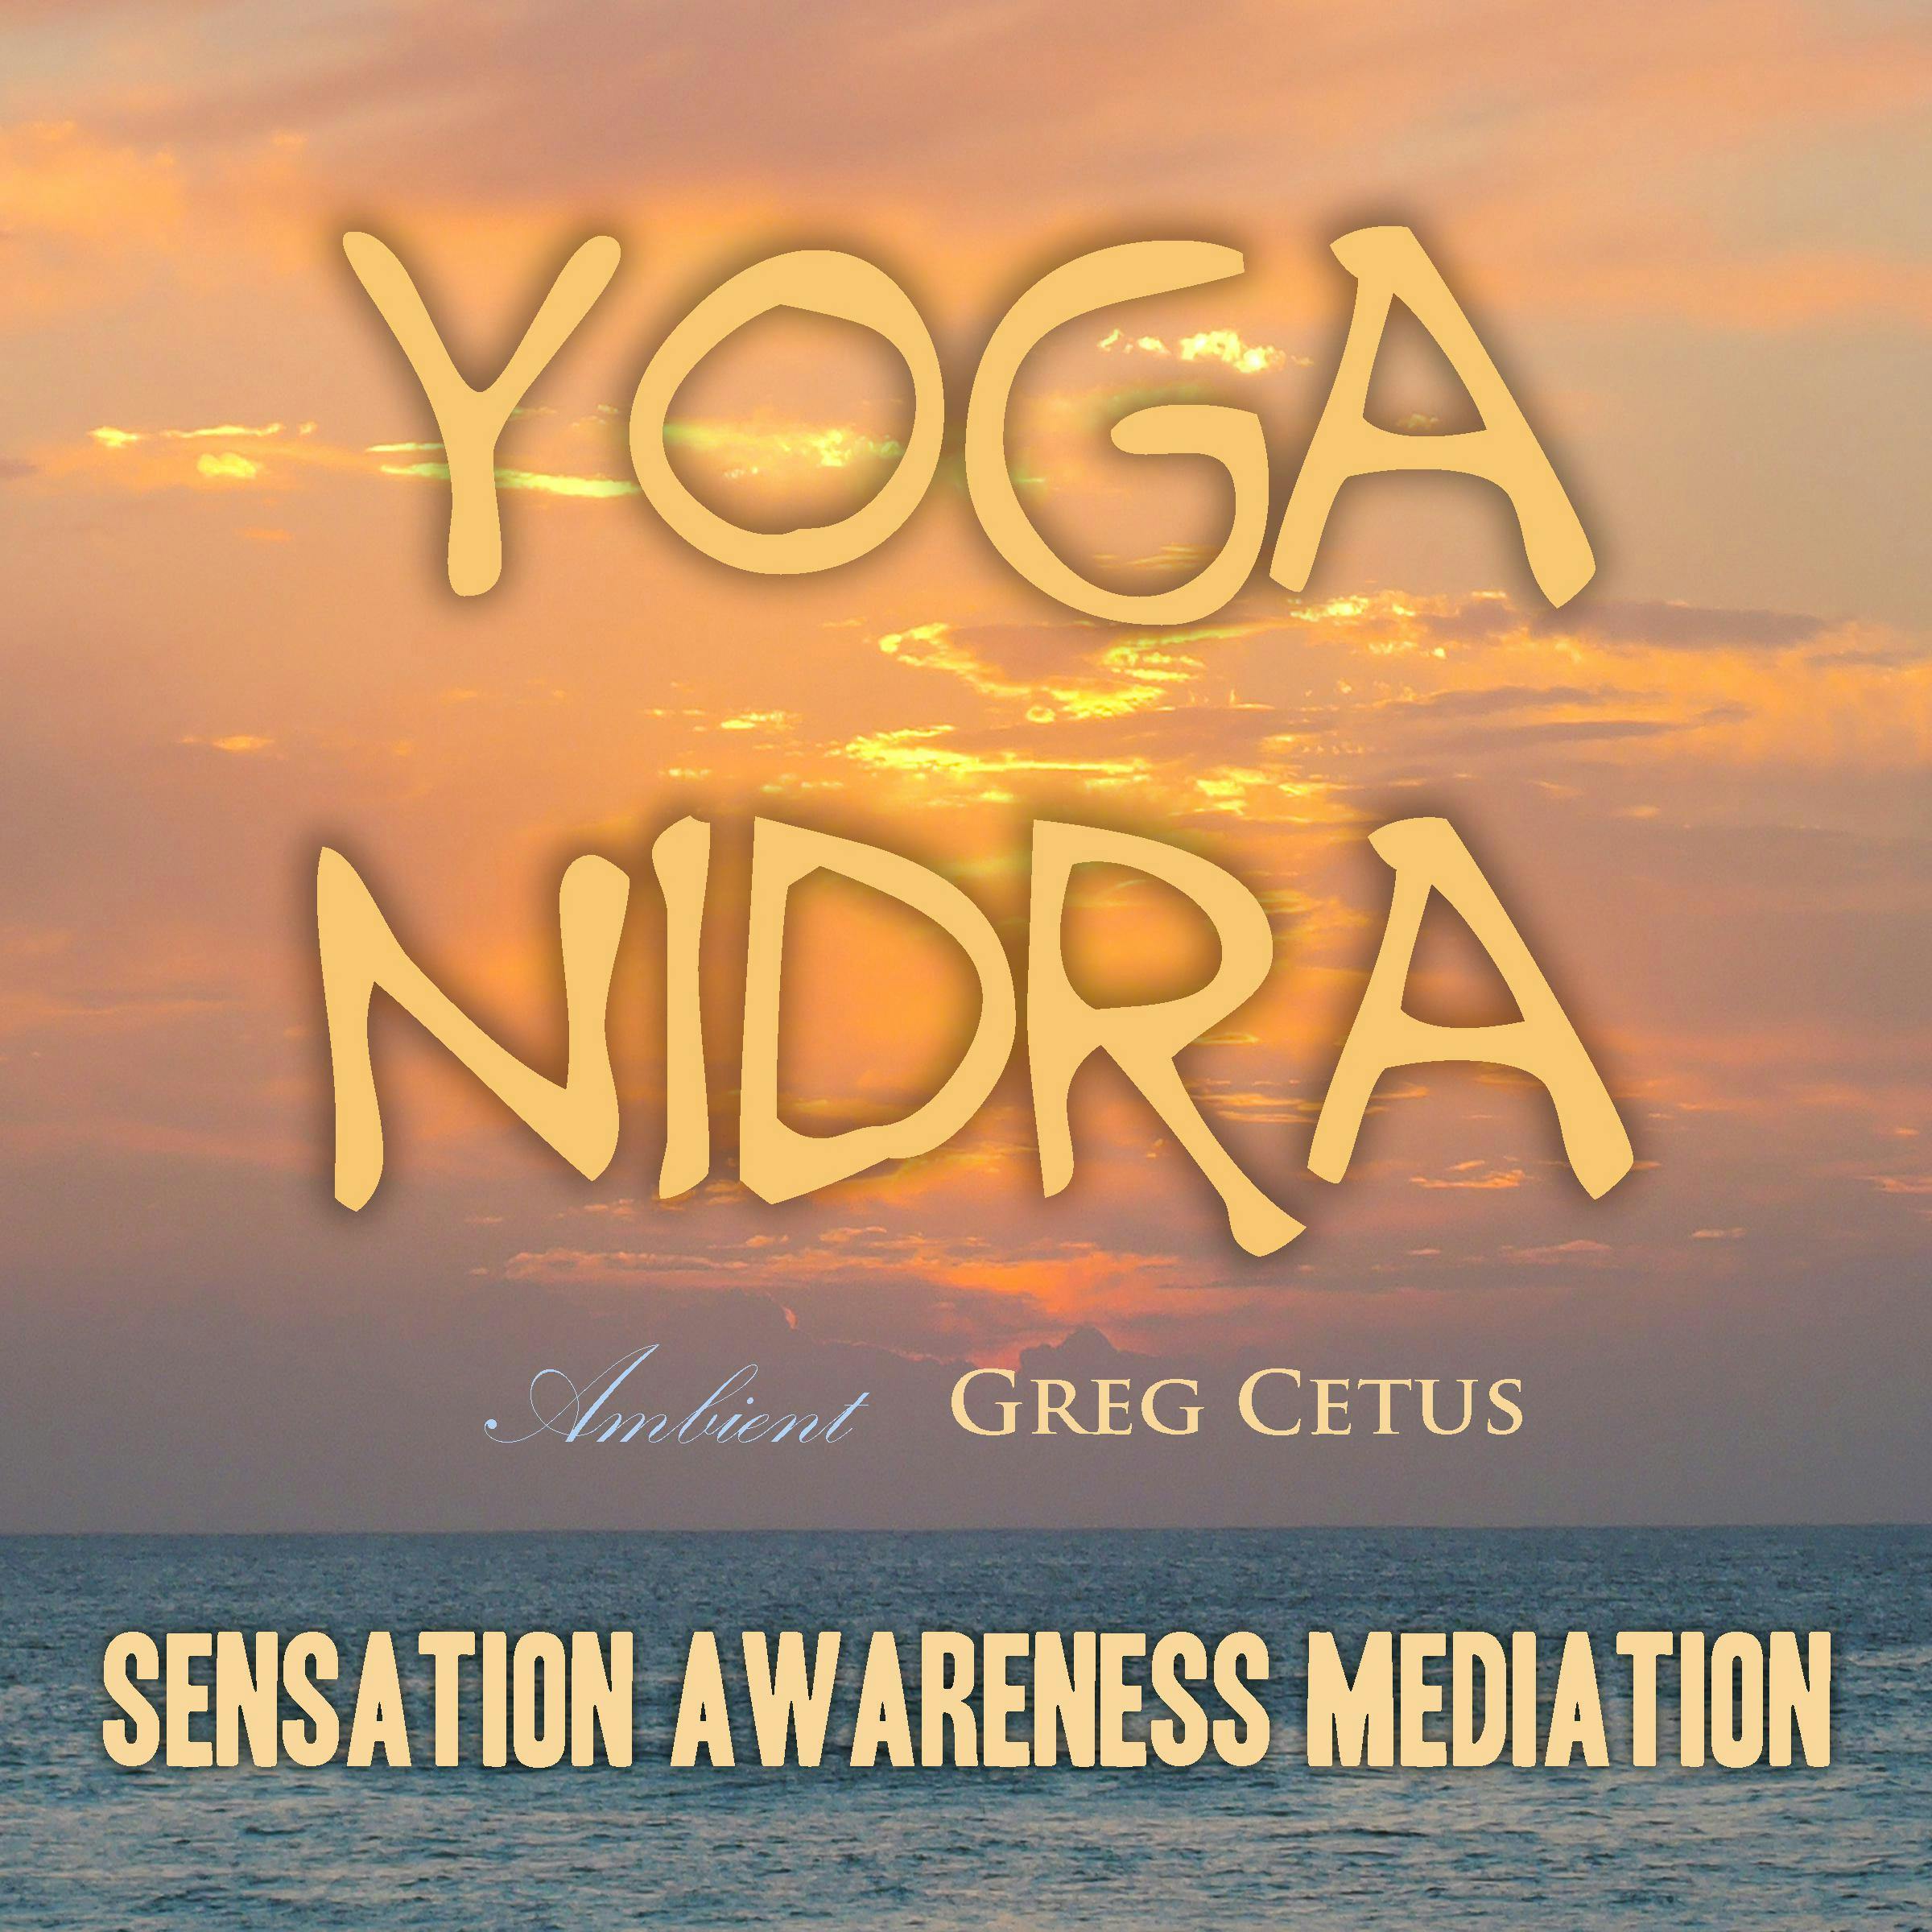 Yoga Nidra - Sensation Awareness Mediation: Sensation Awareness Mediation - Greg Cetus